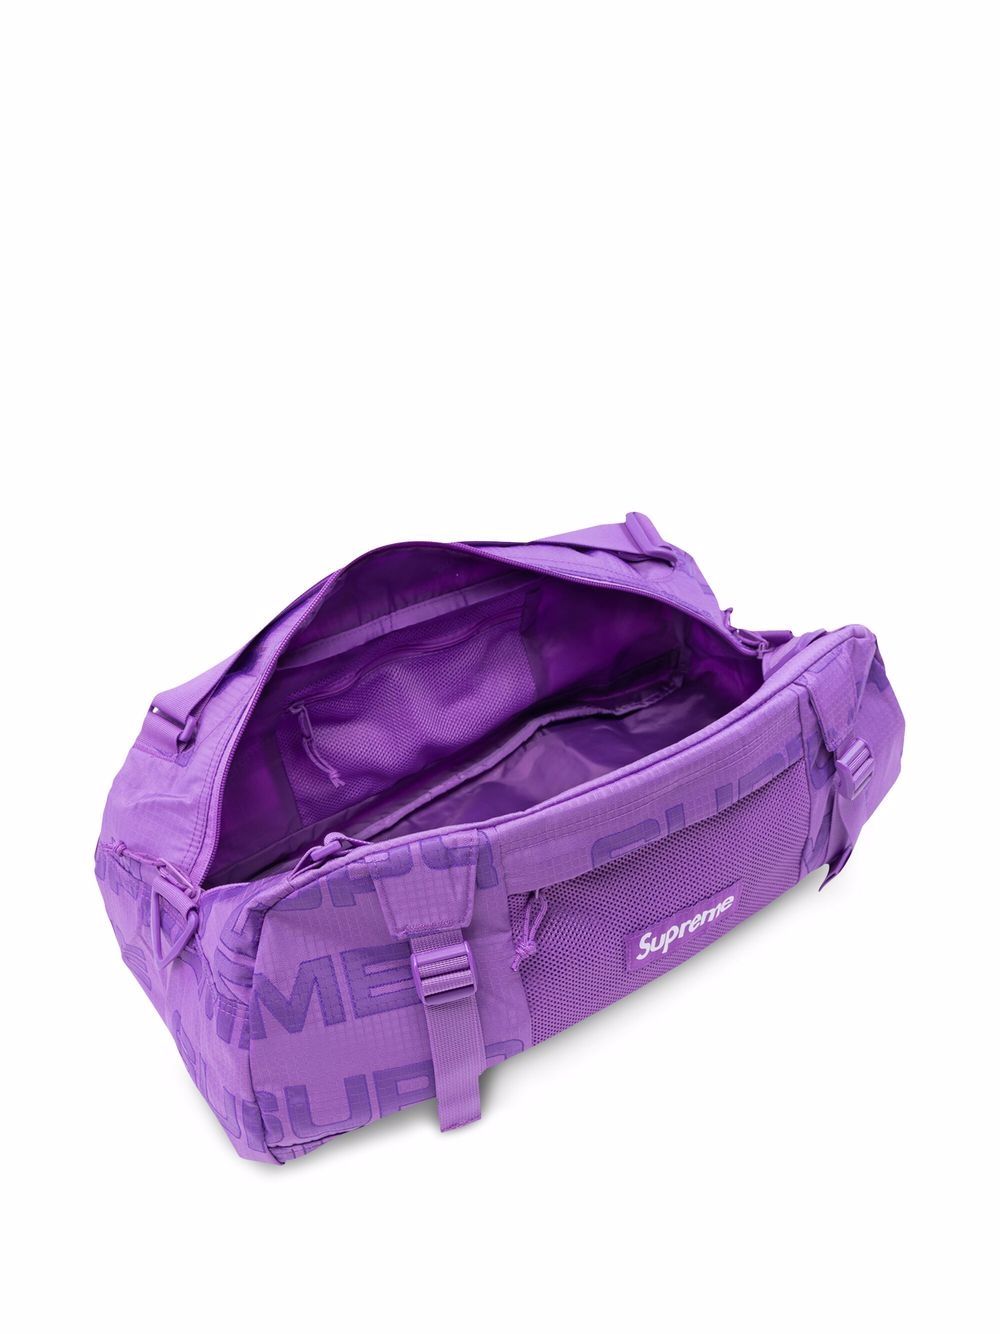 Supreme Duffle Bag FW21 (FW21B10) One Size